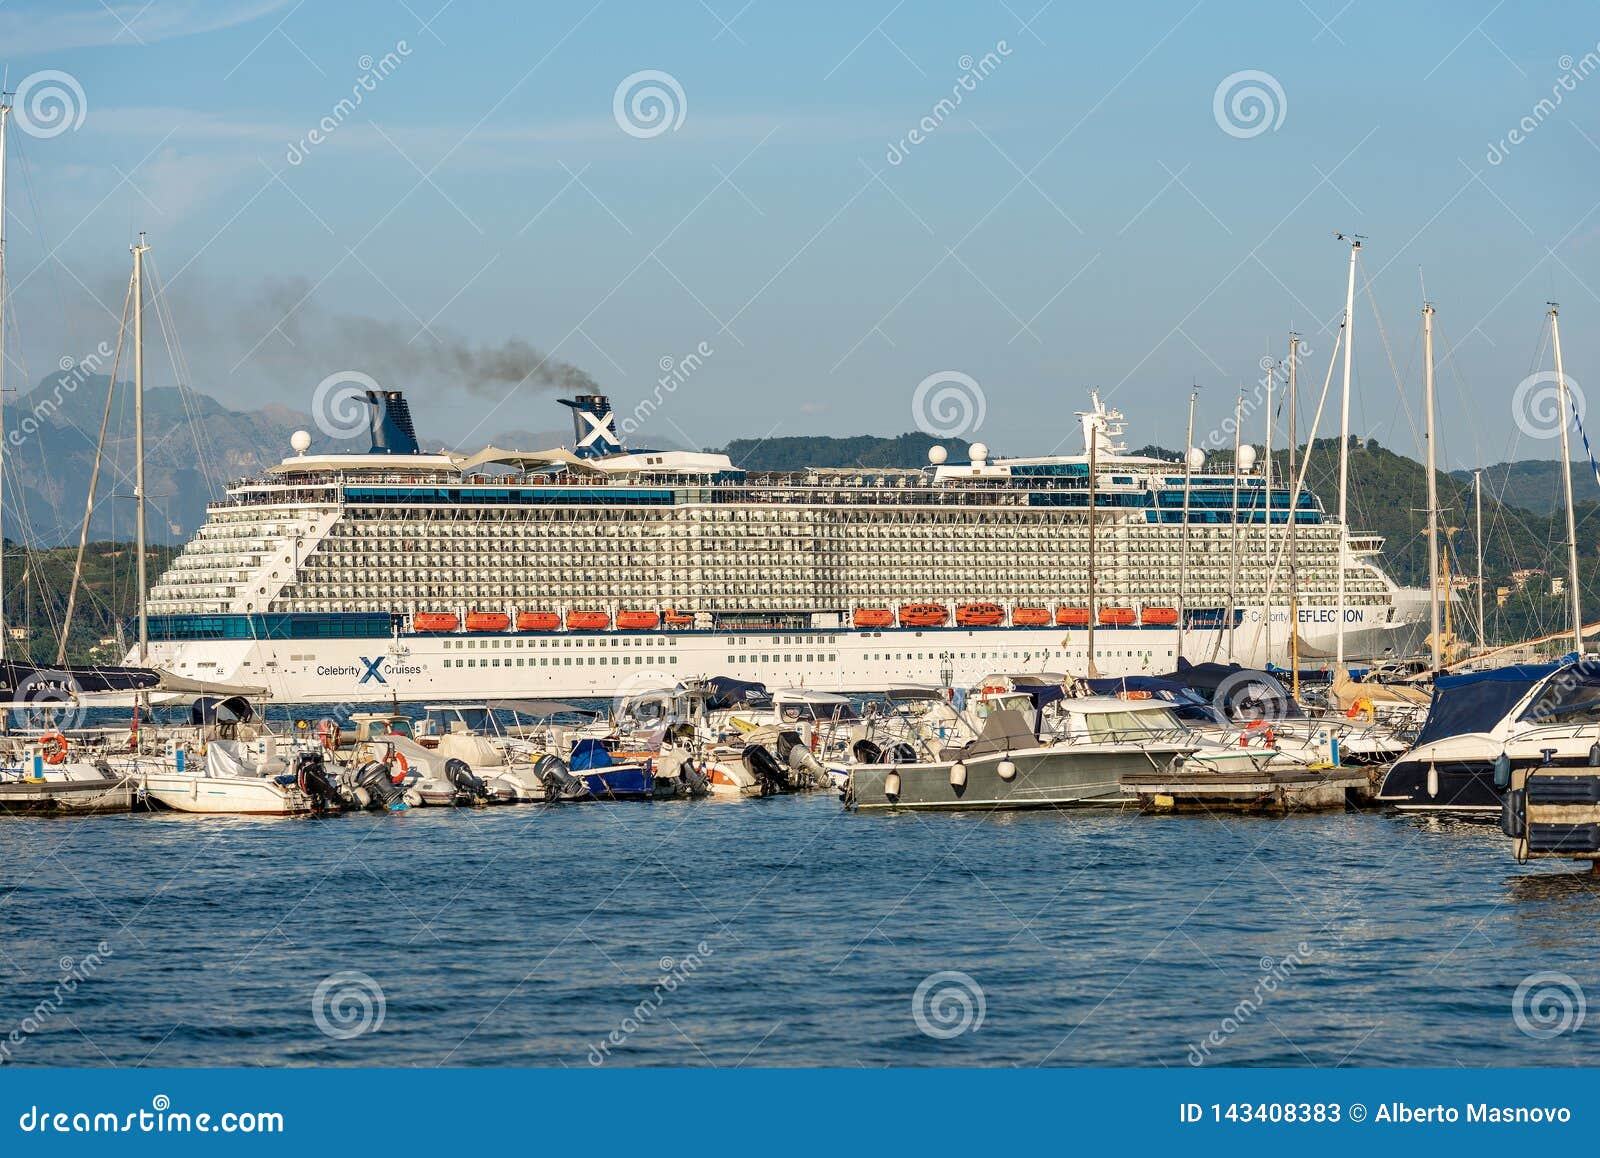 celebrity x cruise port